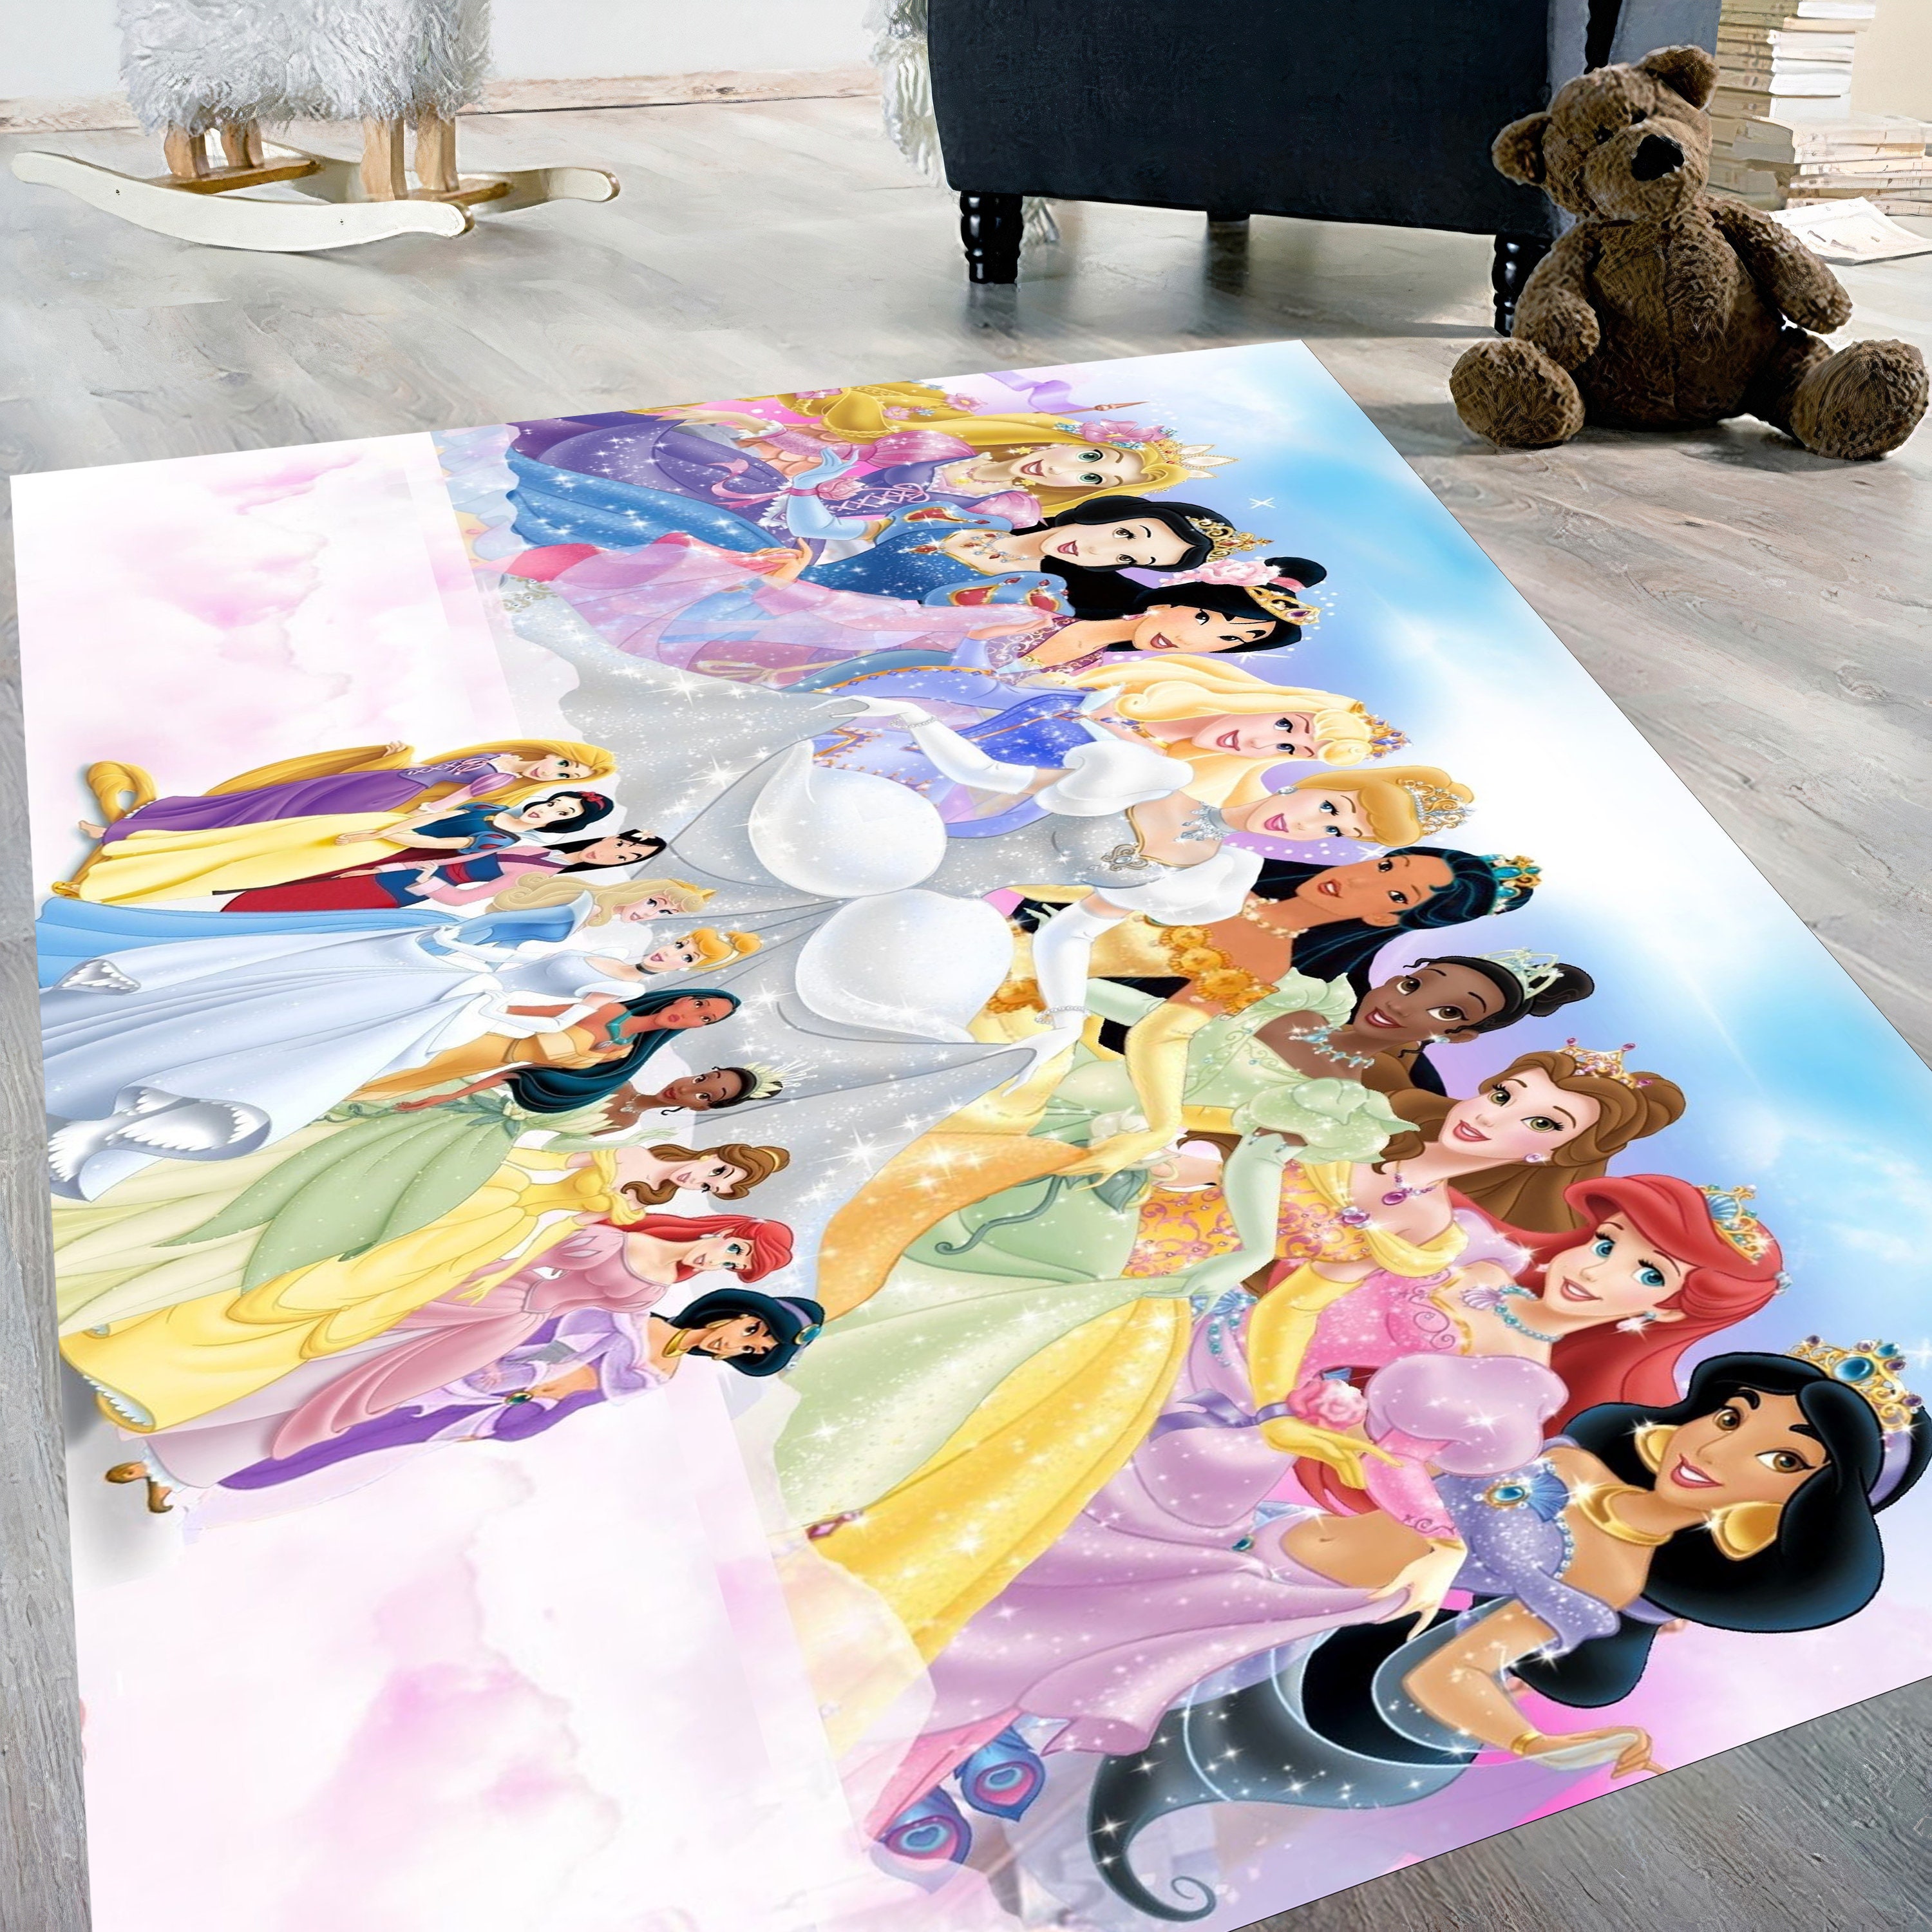 Discover Disney Princesses, Kids Room Rug, Rapunzel Rug, Snow White, Ariel Rug, Fa Mulan Rug, Girl Room Rug, Cute Rug, Nursery Rug, Kids Room Decor